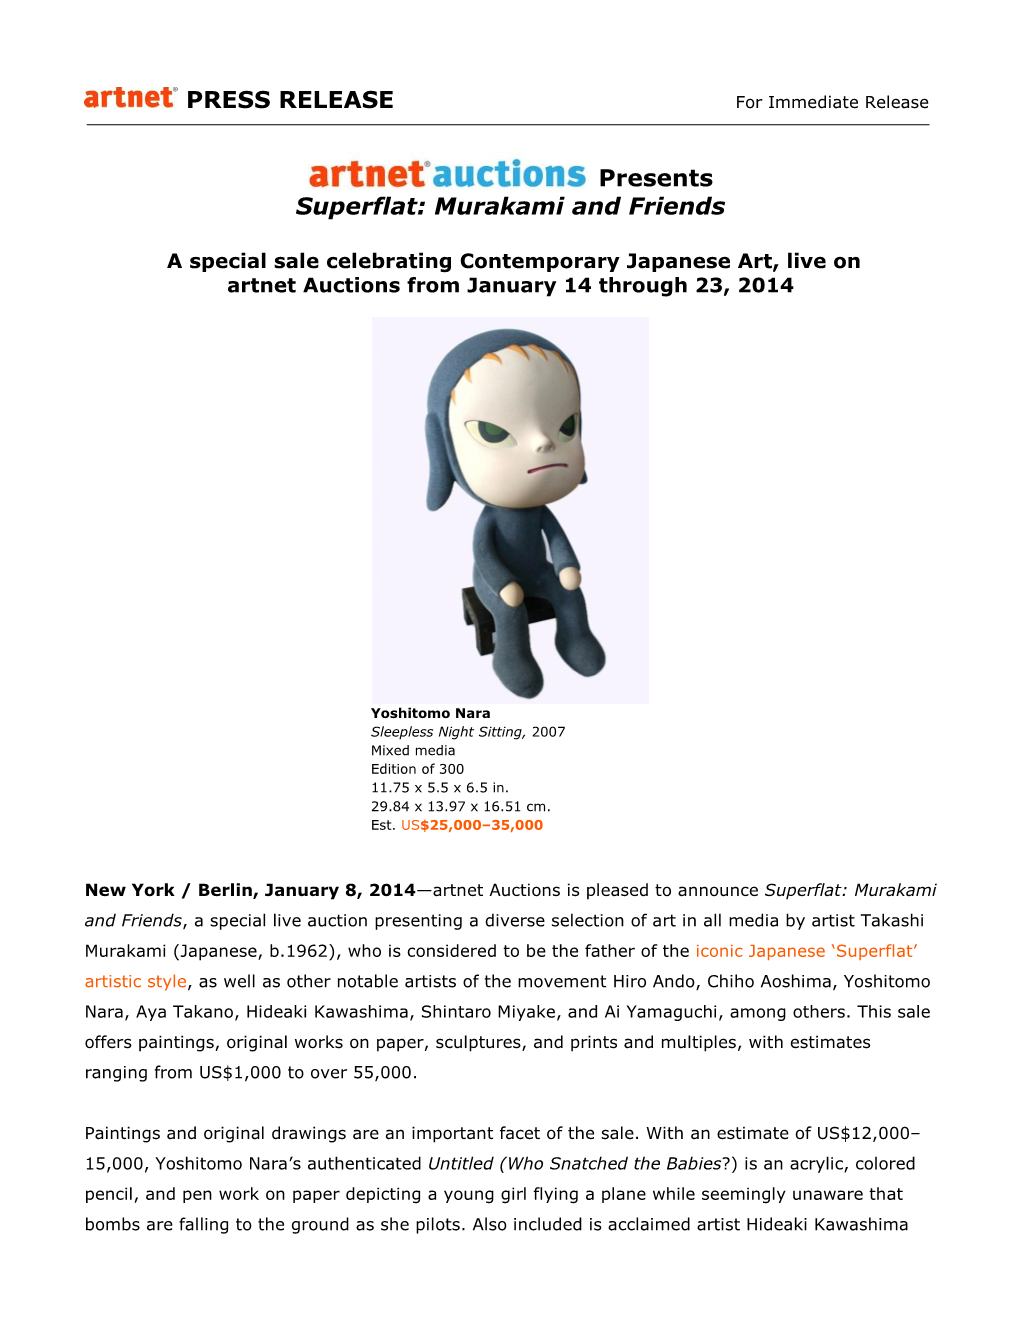 Artnet Auctions Presents Superflat: Murakami and Friends